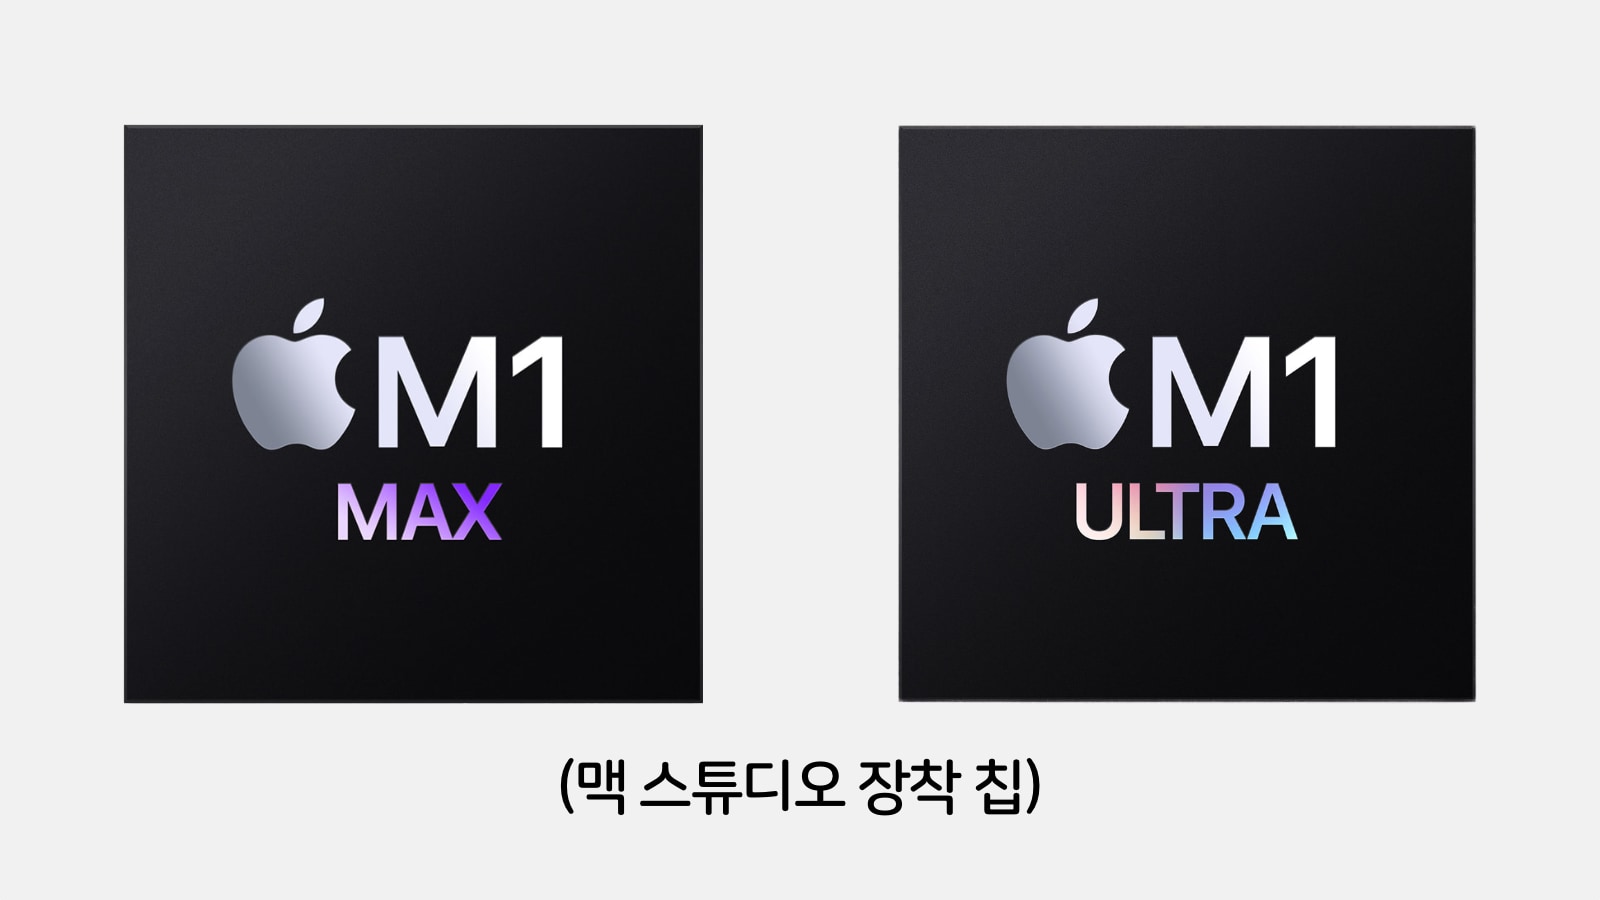 M1 Max M1 Ultra 칩